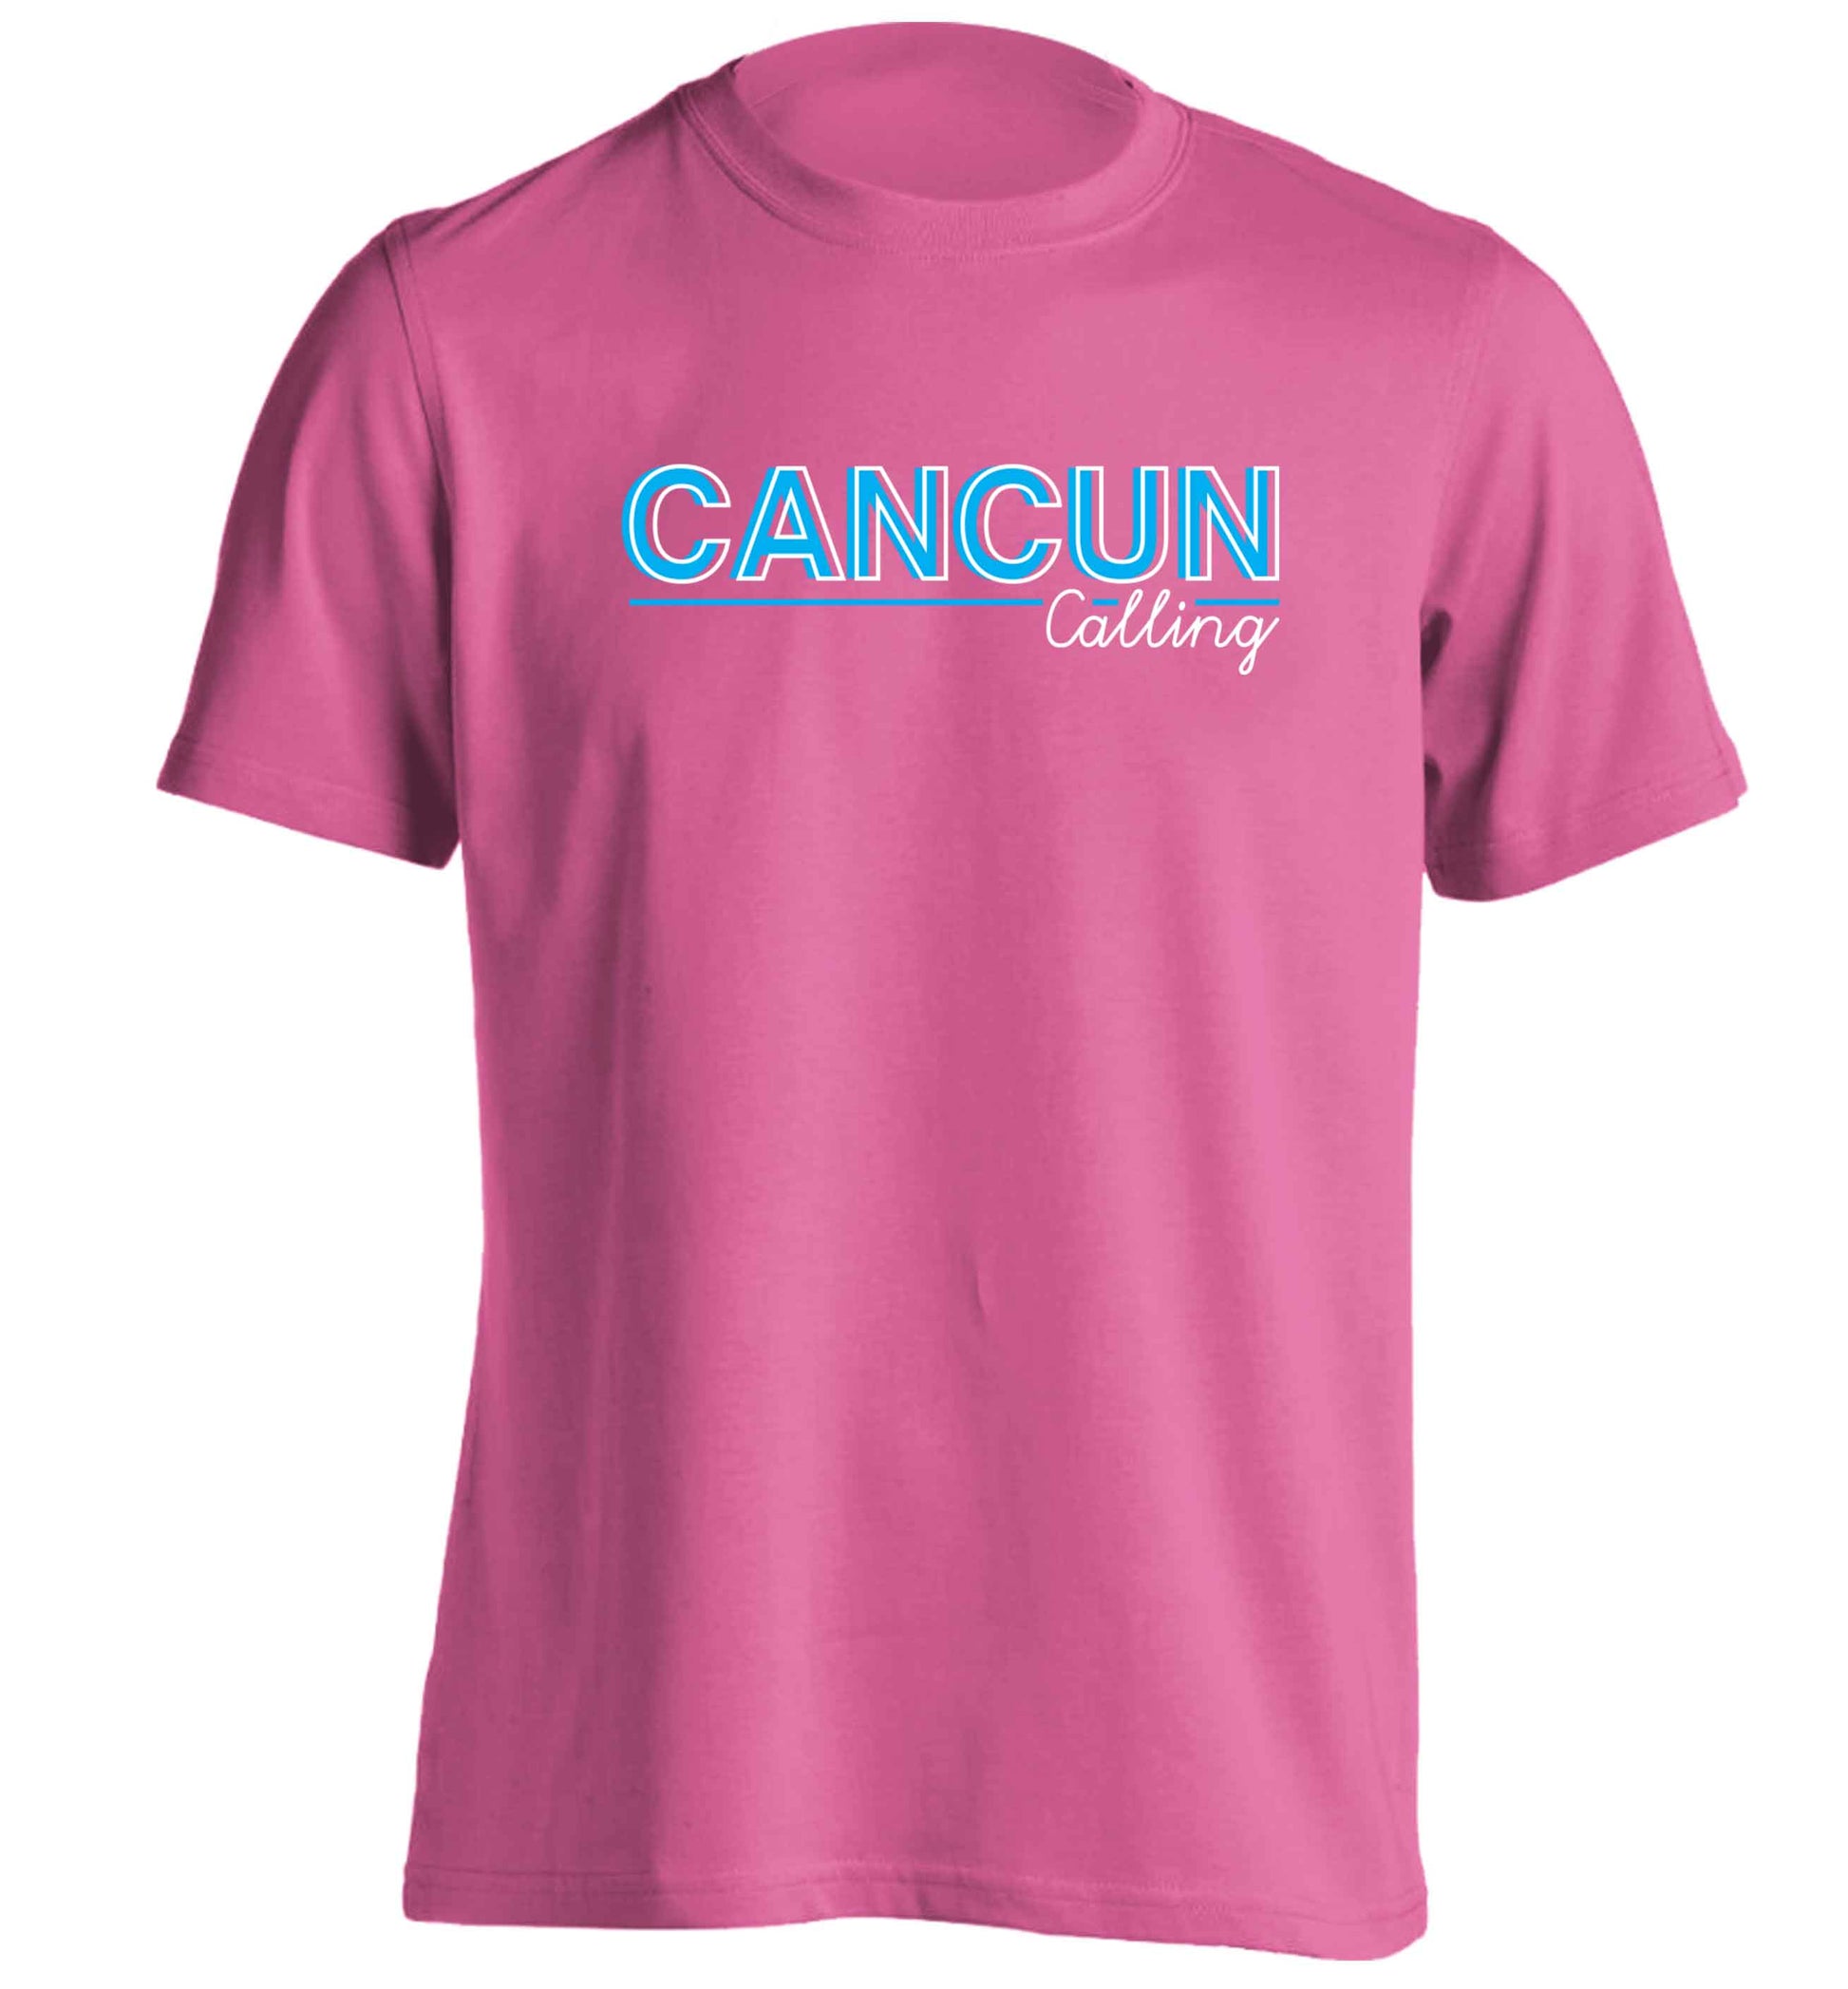 Cancun calling adults unisex pink Tshirt 2XL